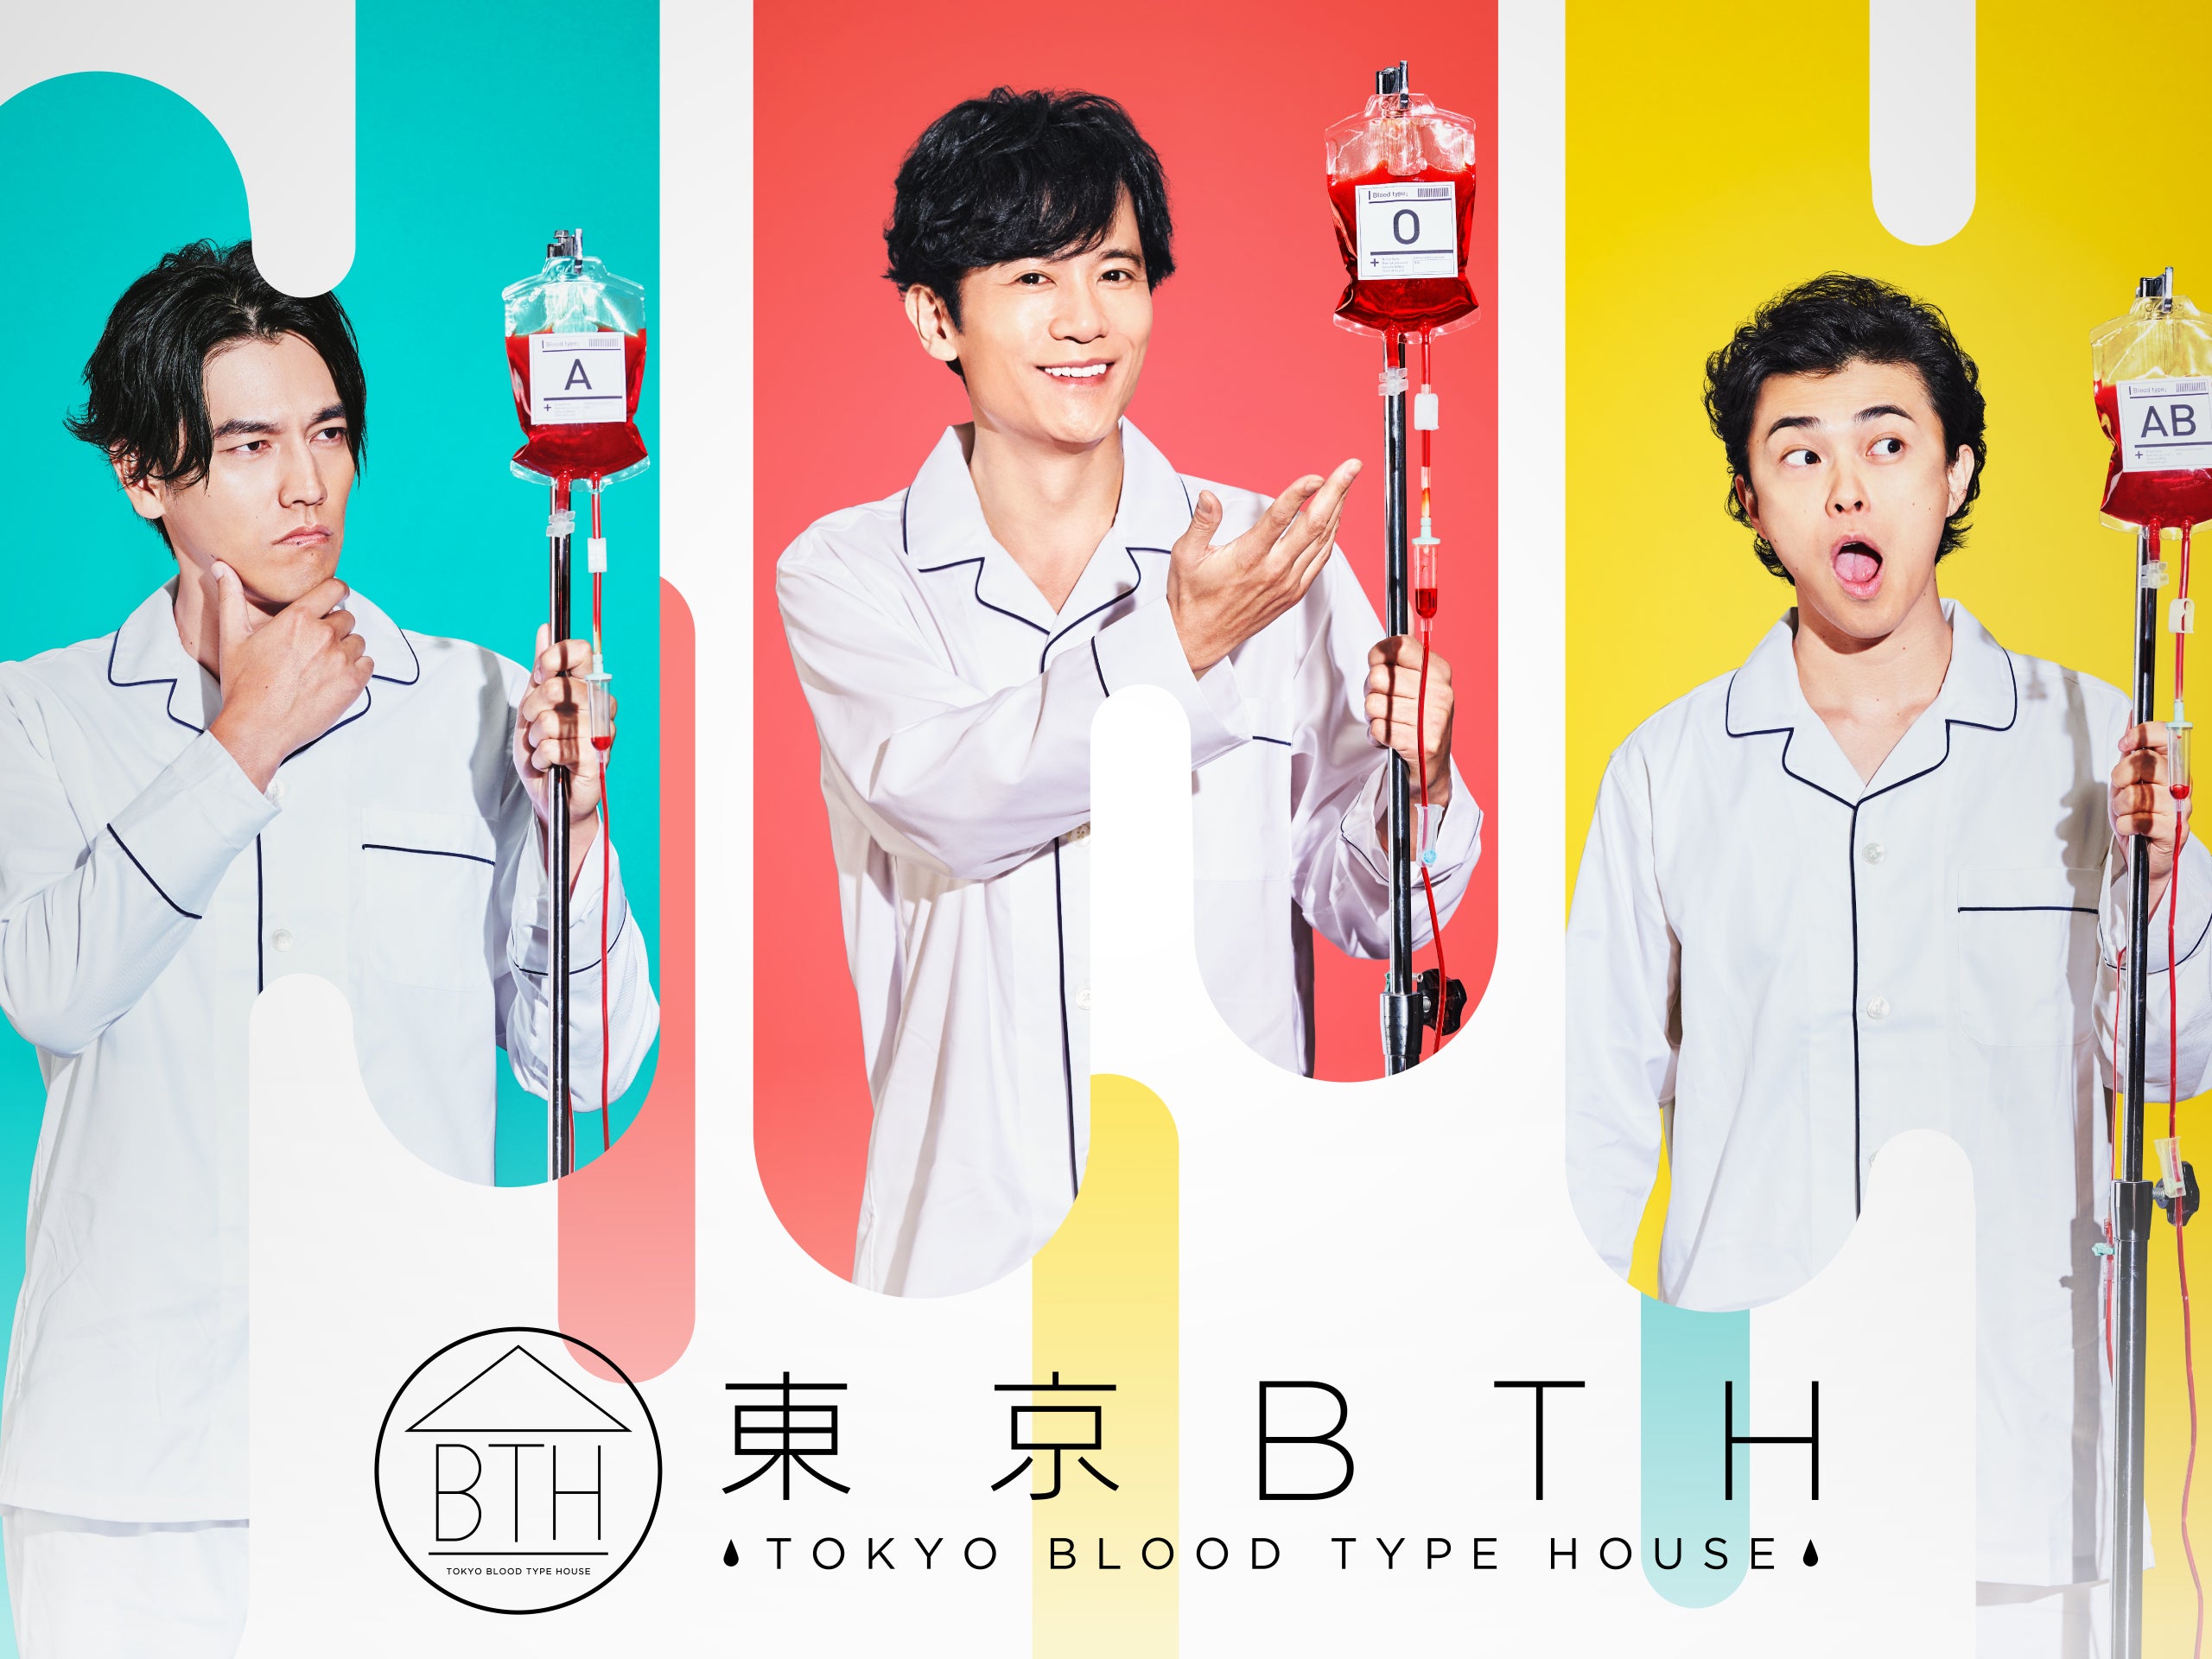 TV ratings for Tokyo Bth: Tokyo Blood Type House (東京BTH〜TOKYO BLOOD TYPE HOUSE〜) in Chile. Amazon Prime Video TV series